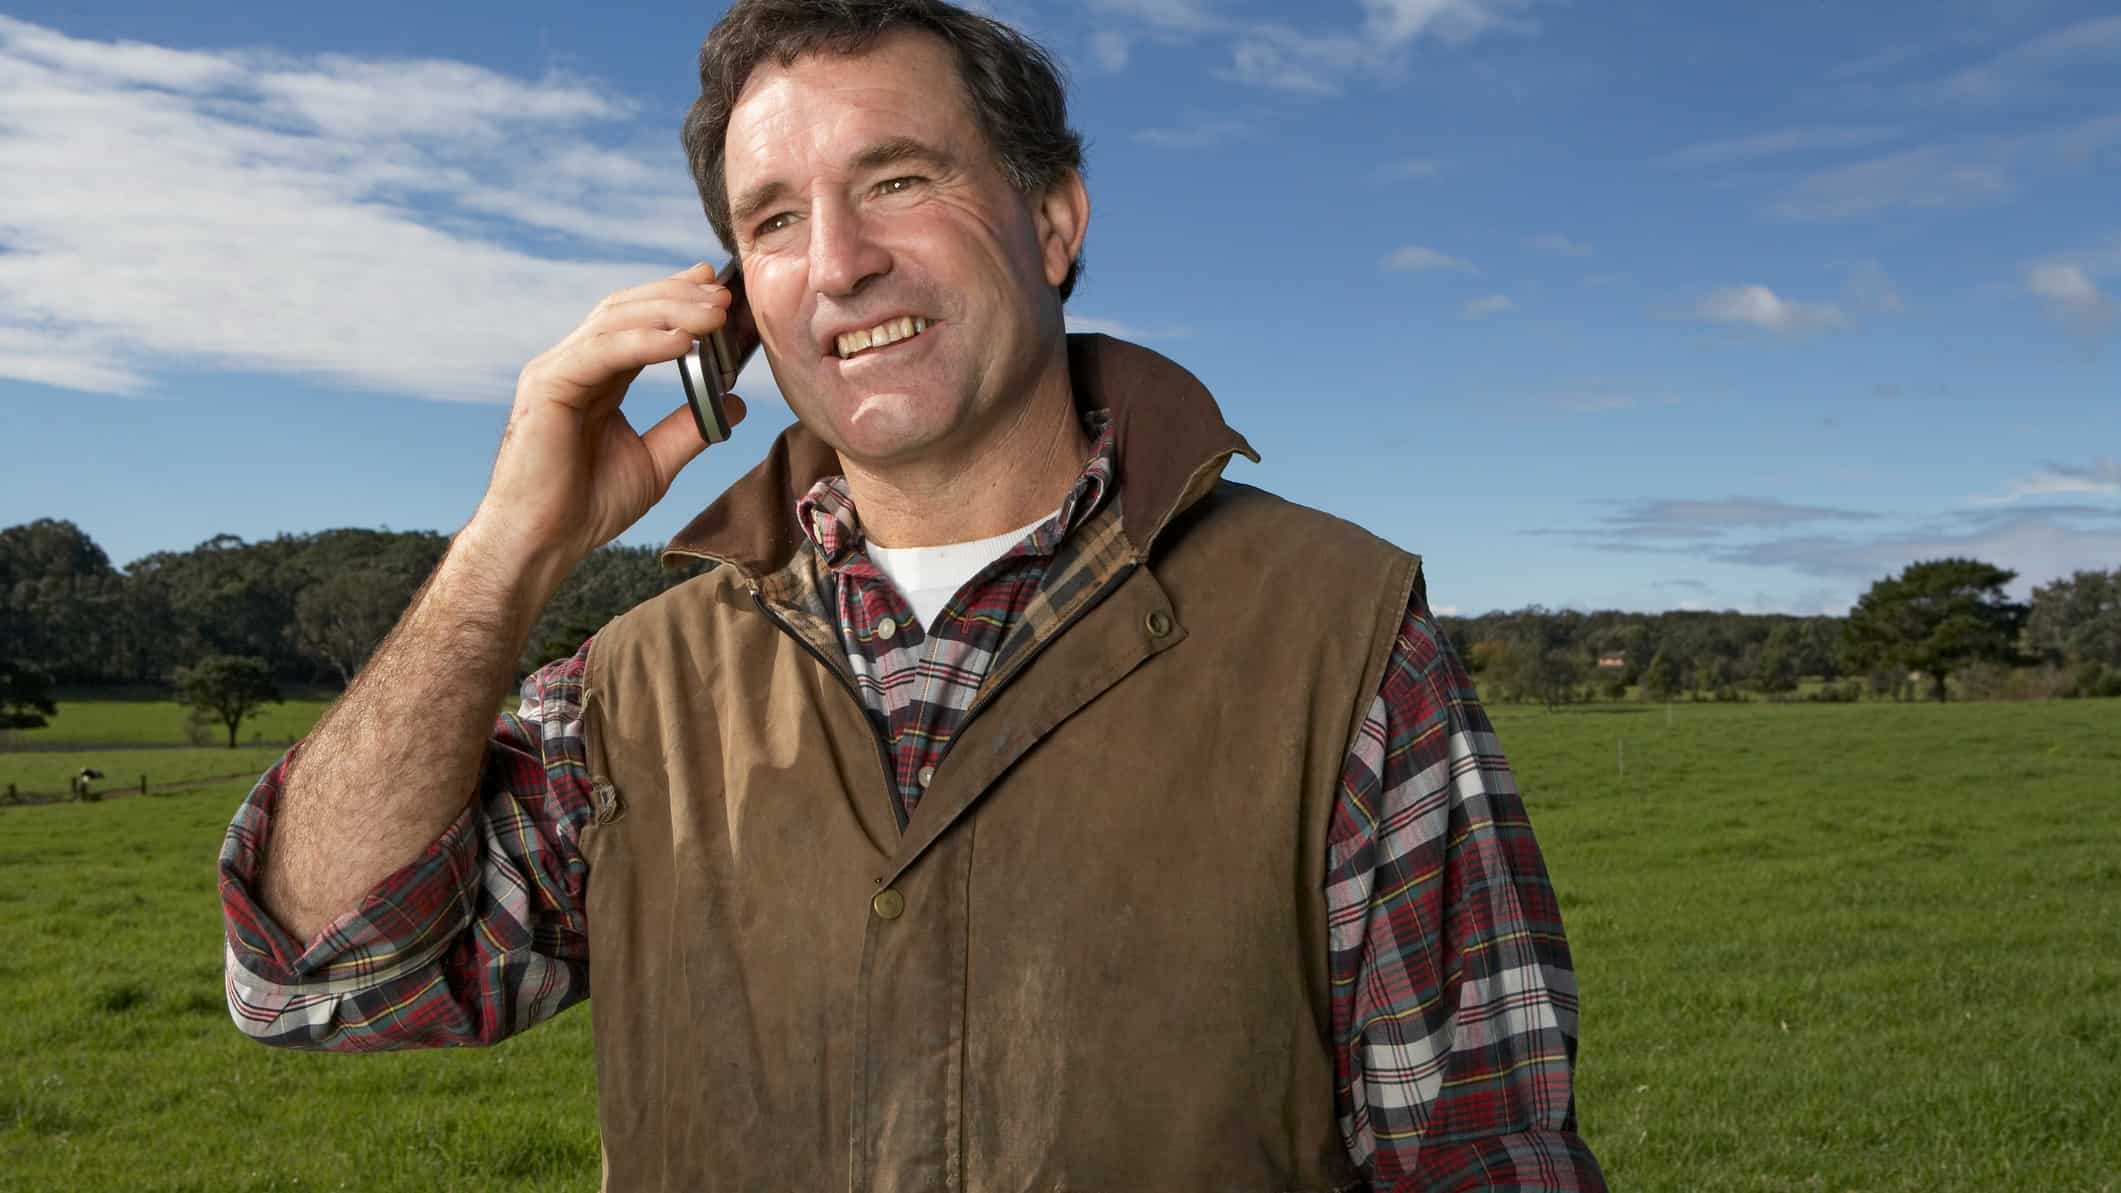 farmer on telephone enjoying telecommunications in rural area